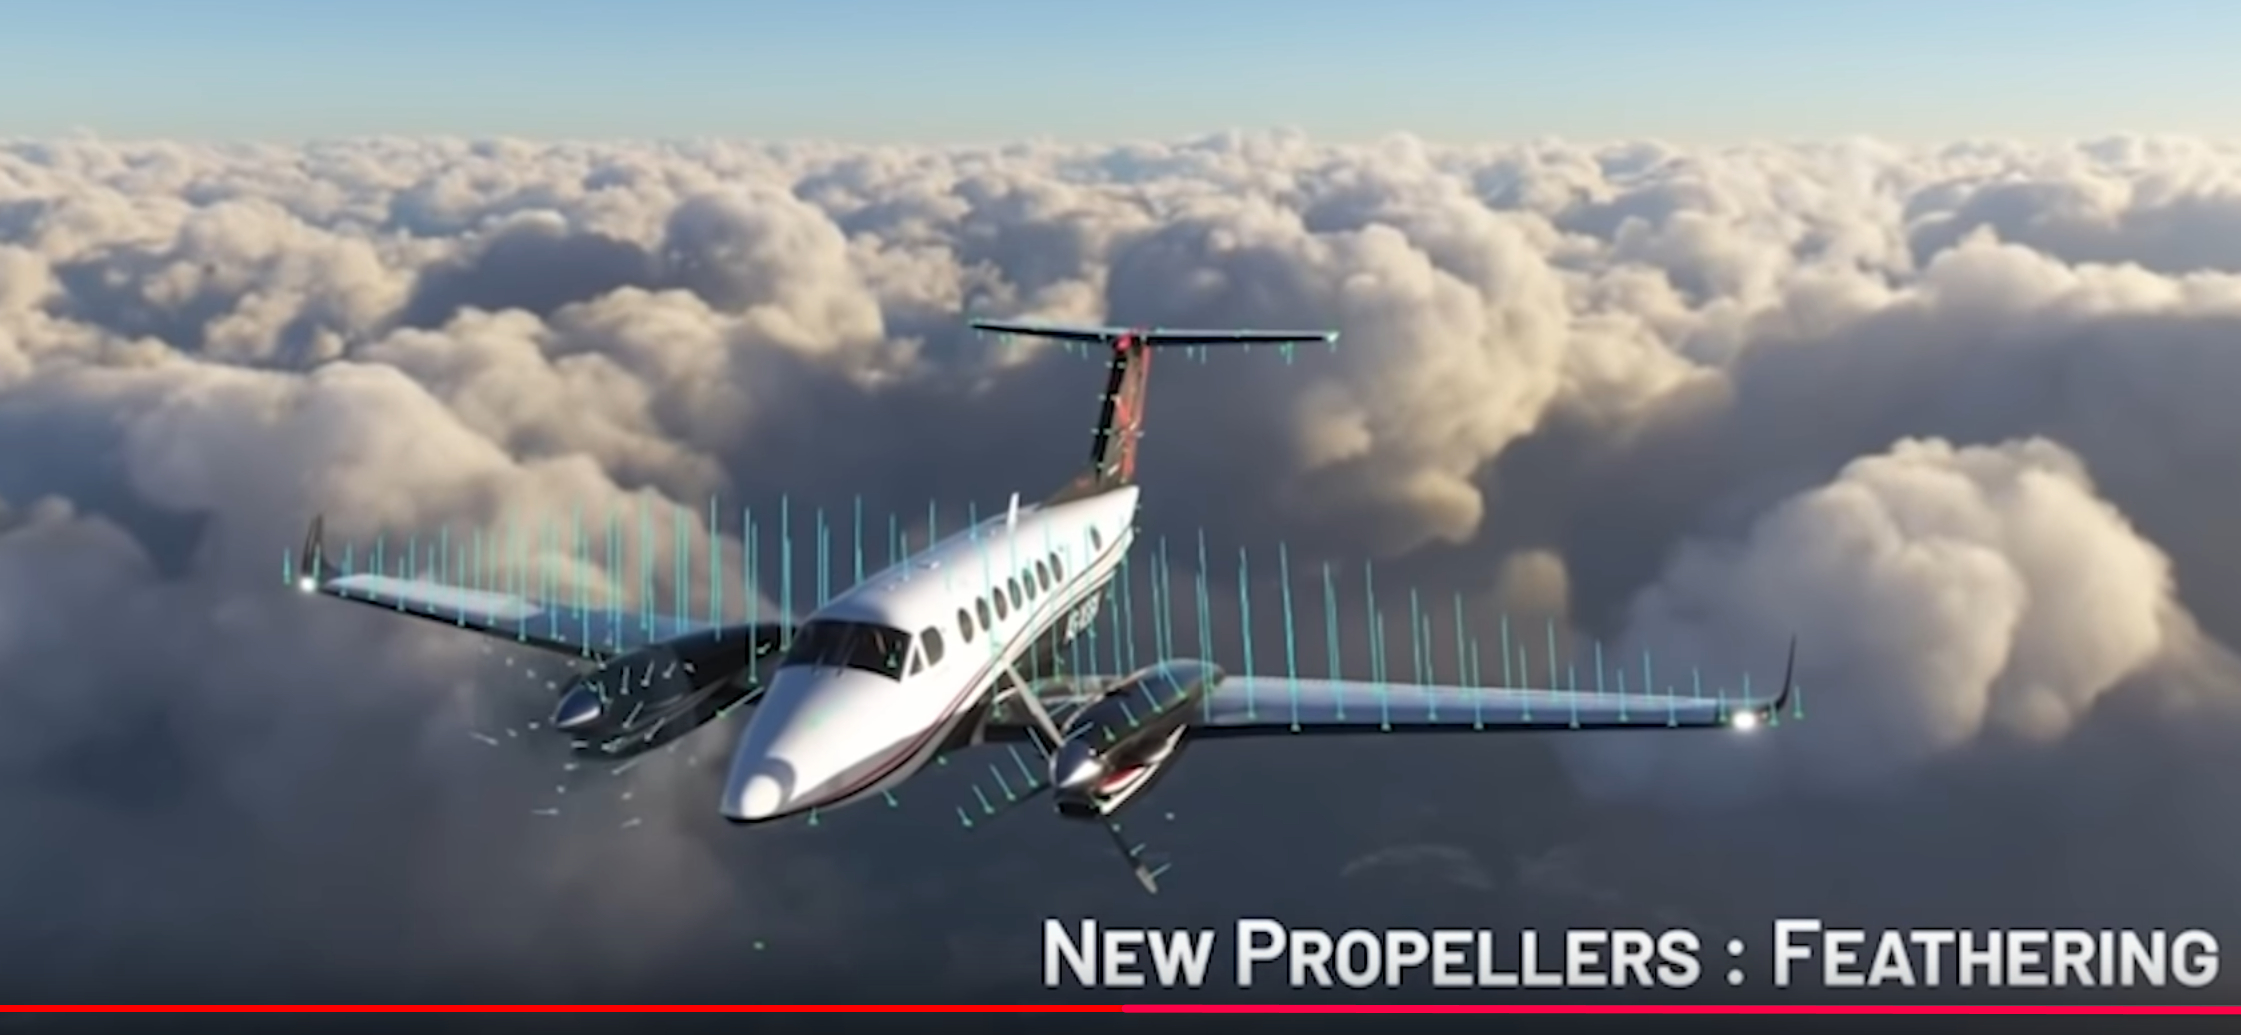 https://i.postimg.cc/Wjtkp8jj/New-Propellers-Feathering.jpg